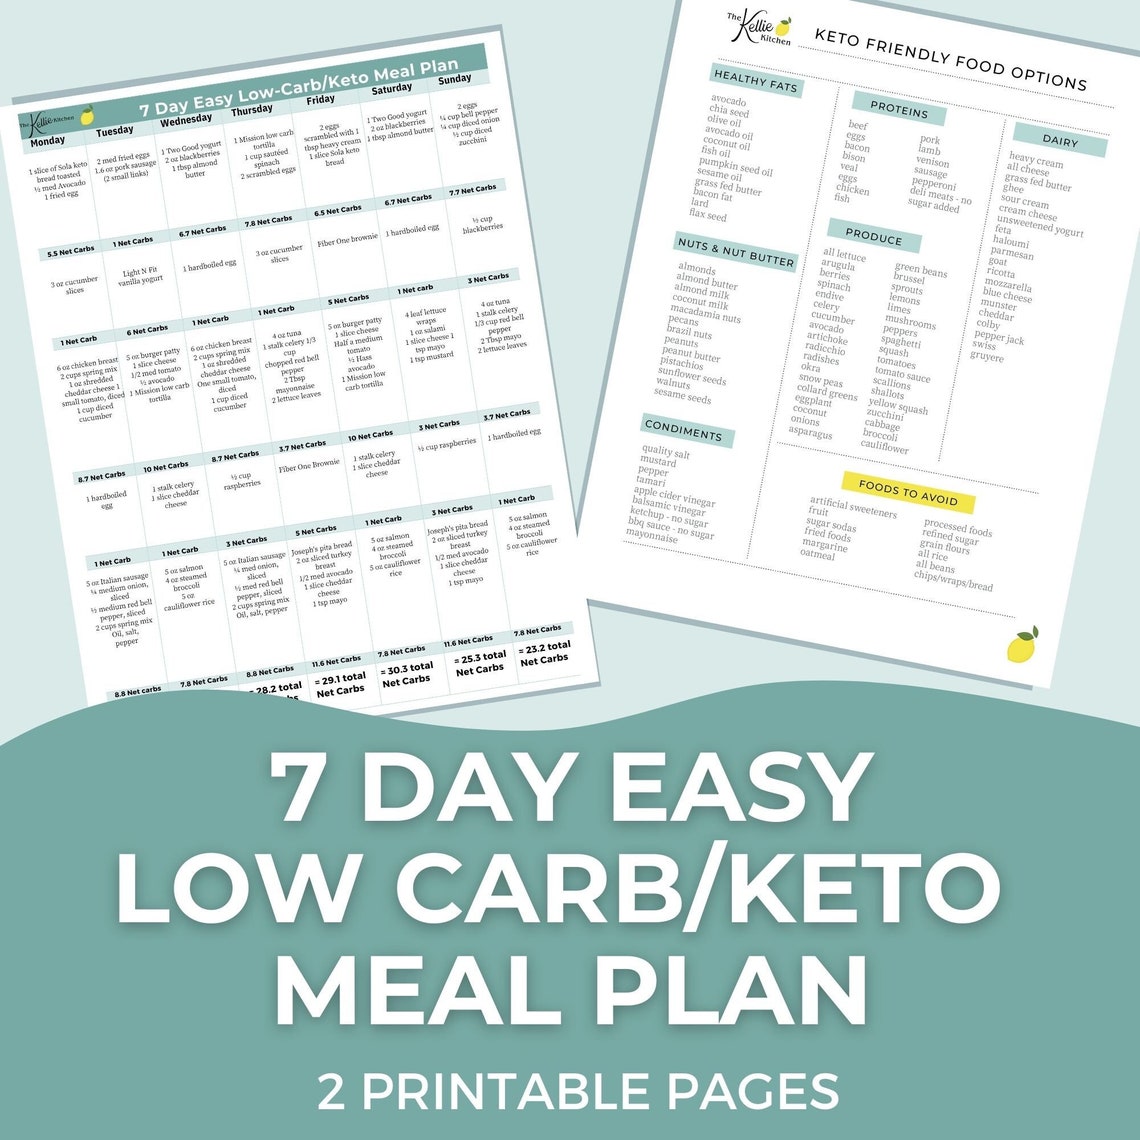 7 Day Meal Plan Keto Diet Plan Easy Low Carb Keto Friendly - Etsy